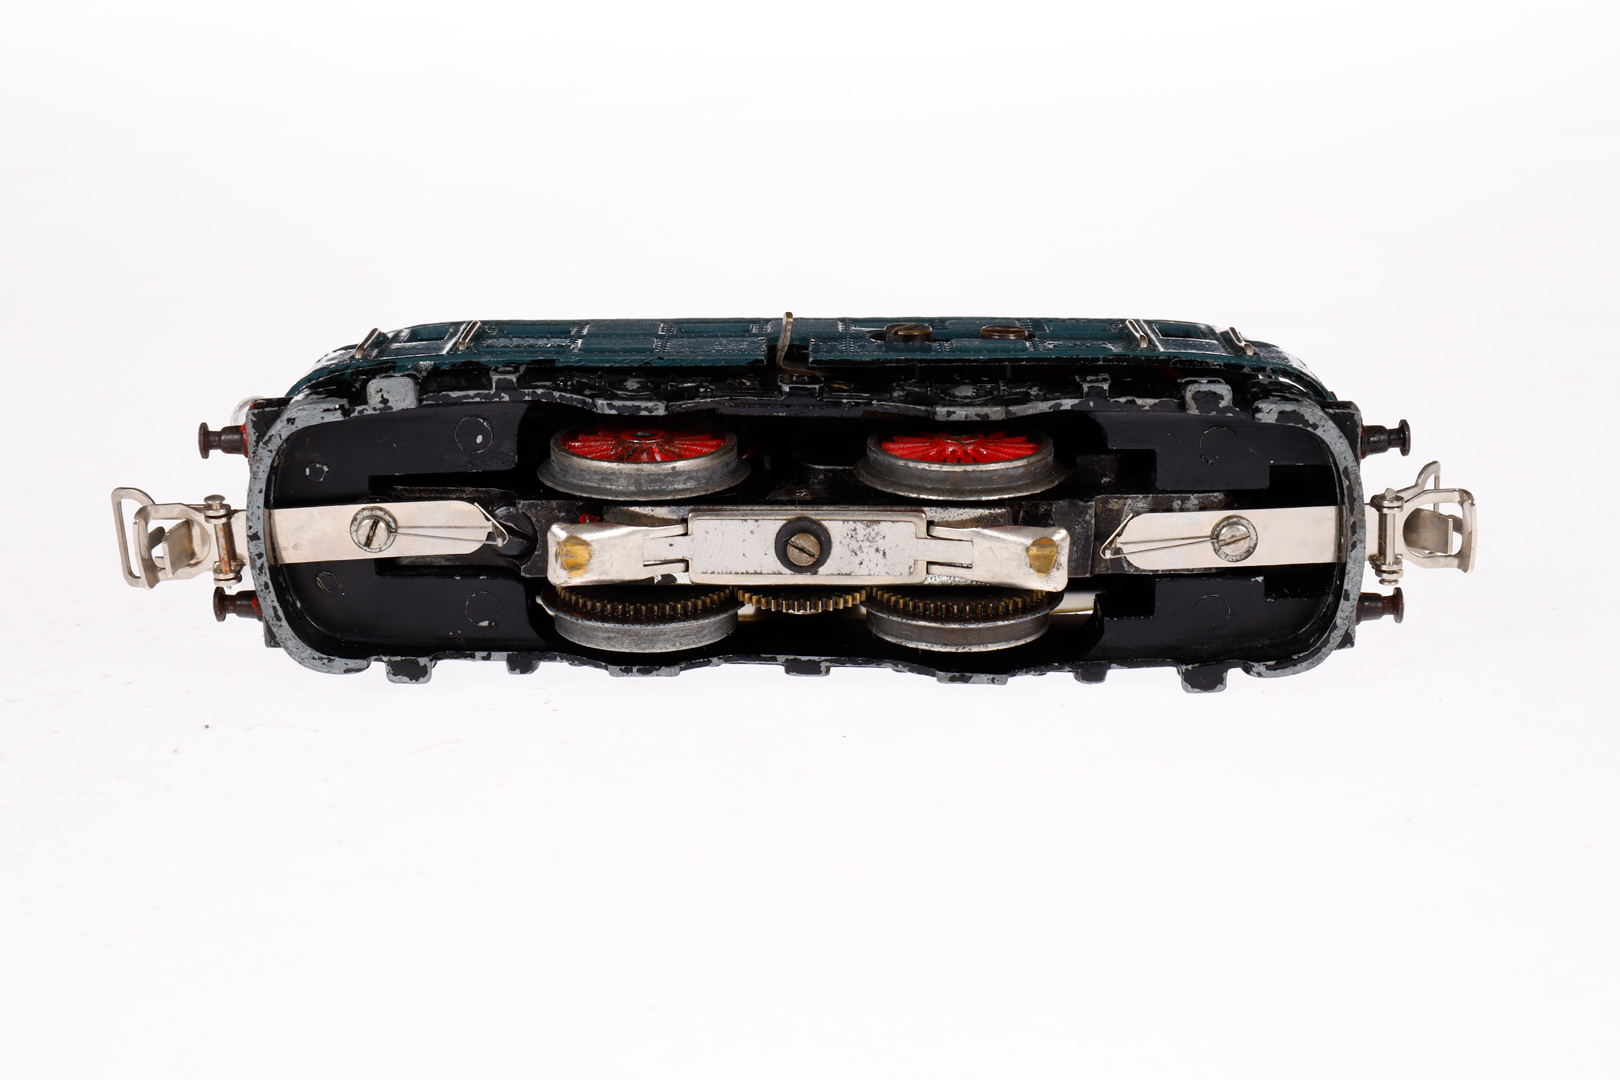 Märklin E-Lok RS 800, Spur H0, Guss, blau, mit 2 el. bel. Stirnlampen, LS und gealterter Lack, Z 3 - Image 2 of 2